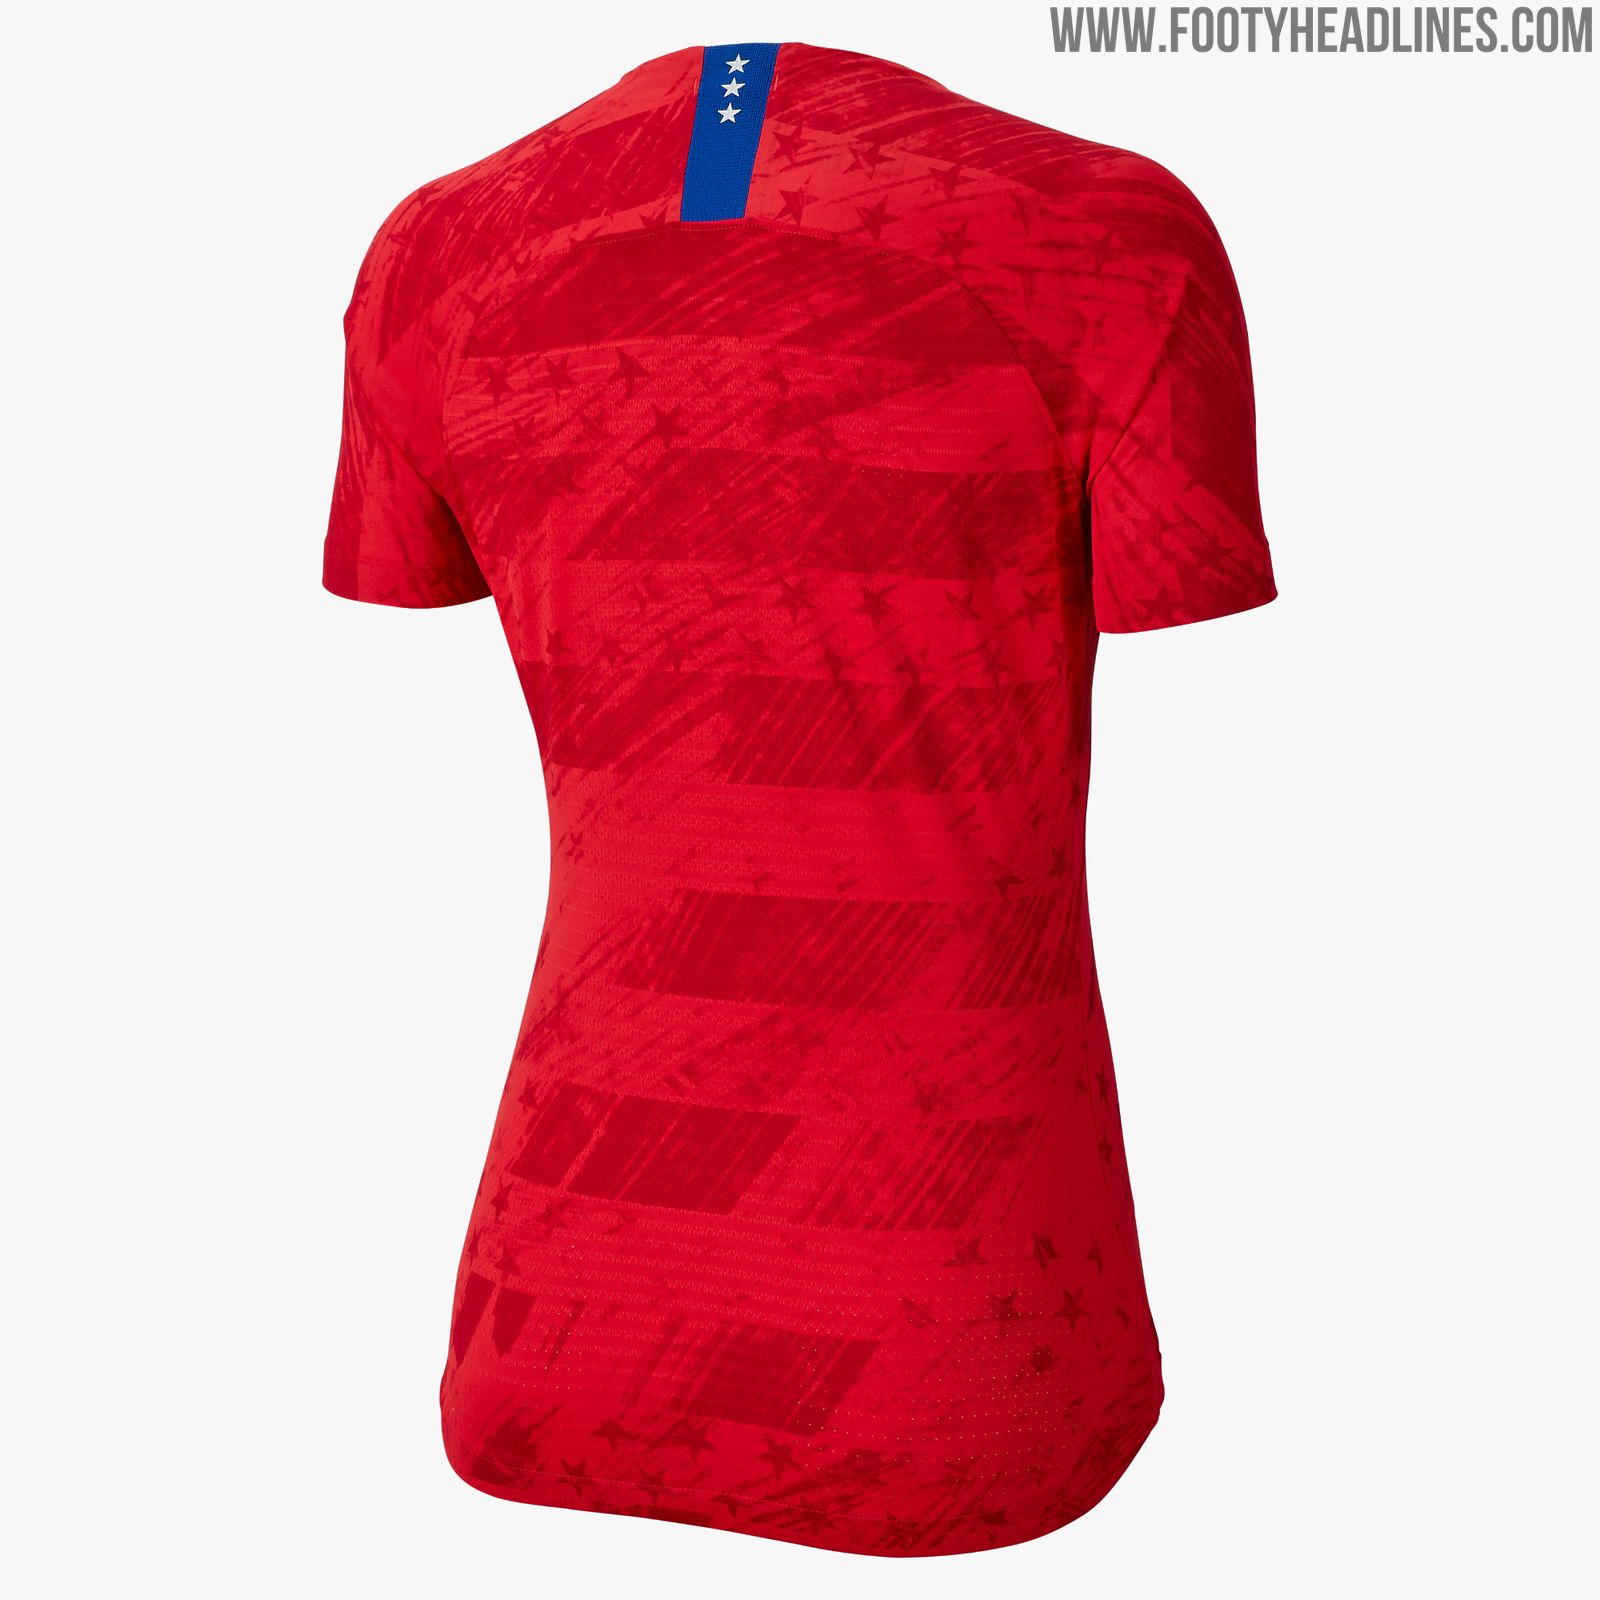 Nike USA 2019 Women's World Cup Away Kit Released - Footy Headlines